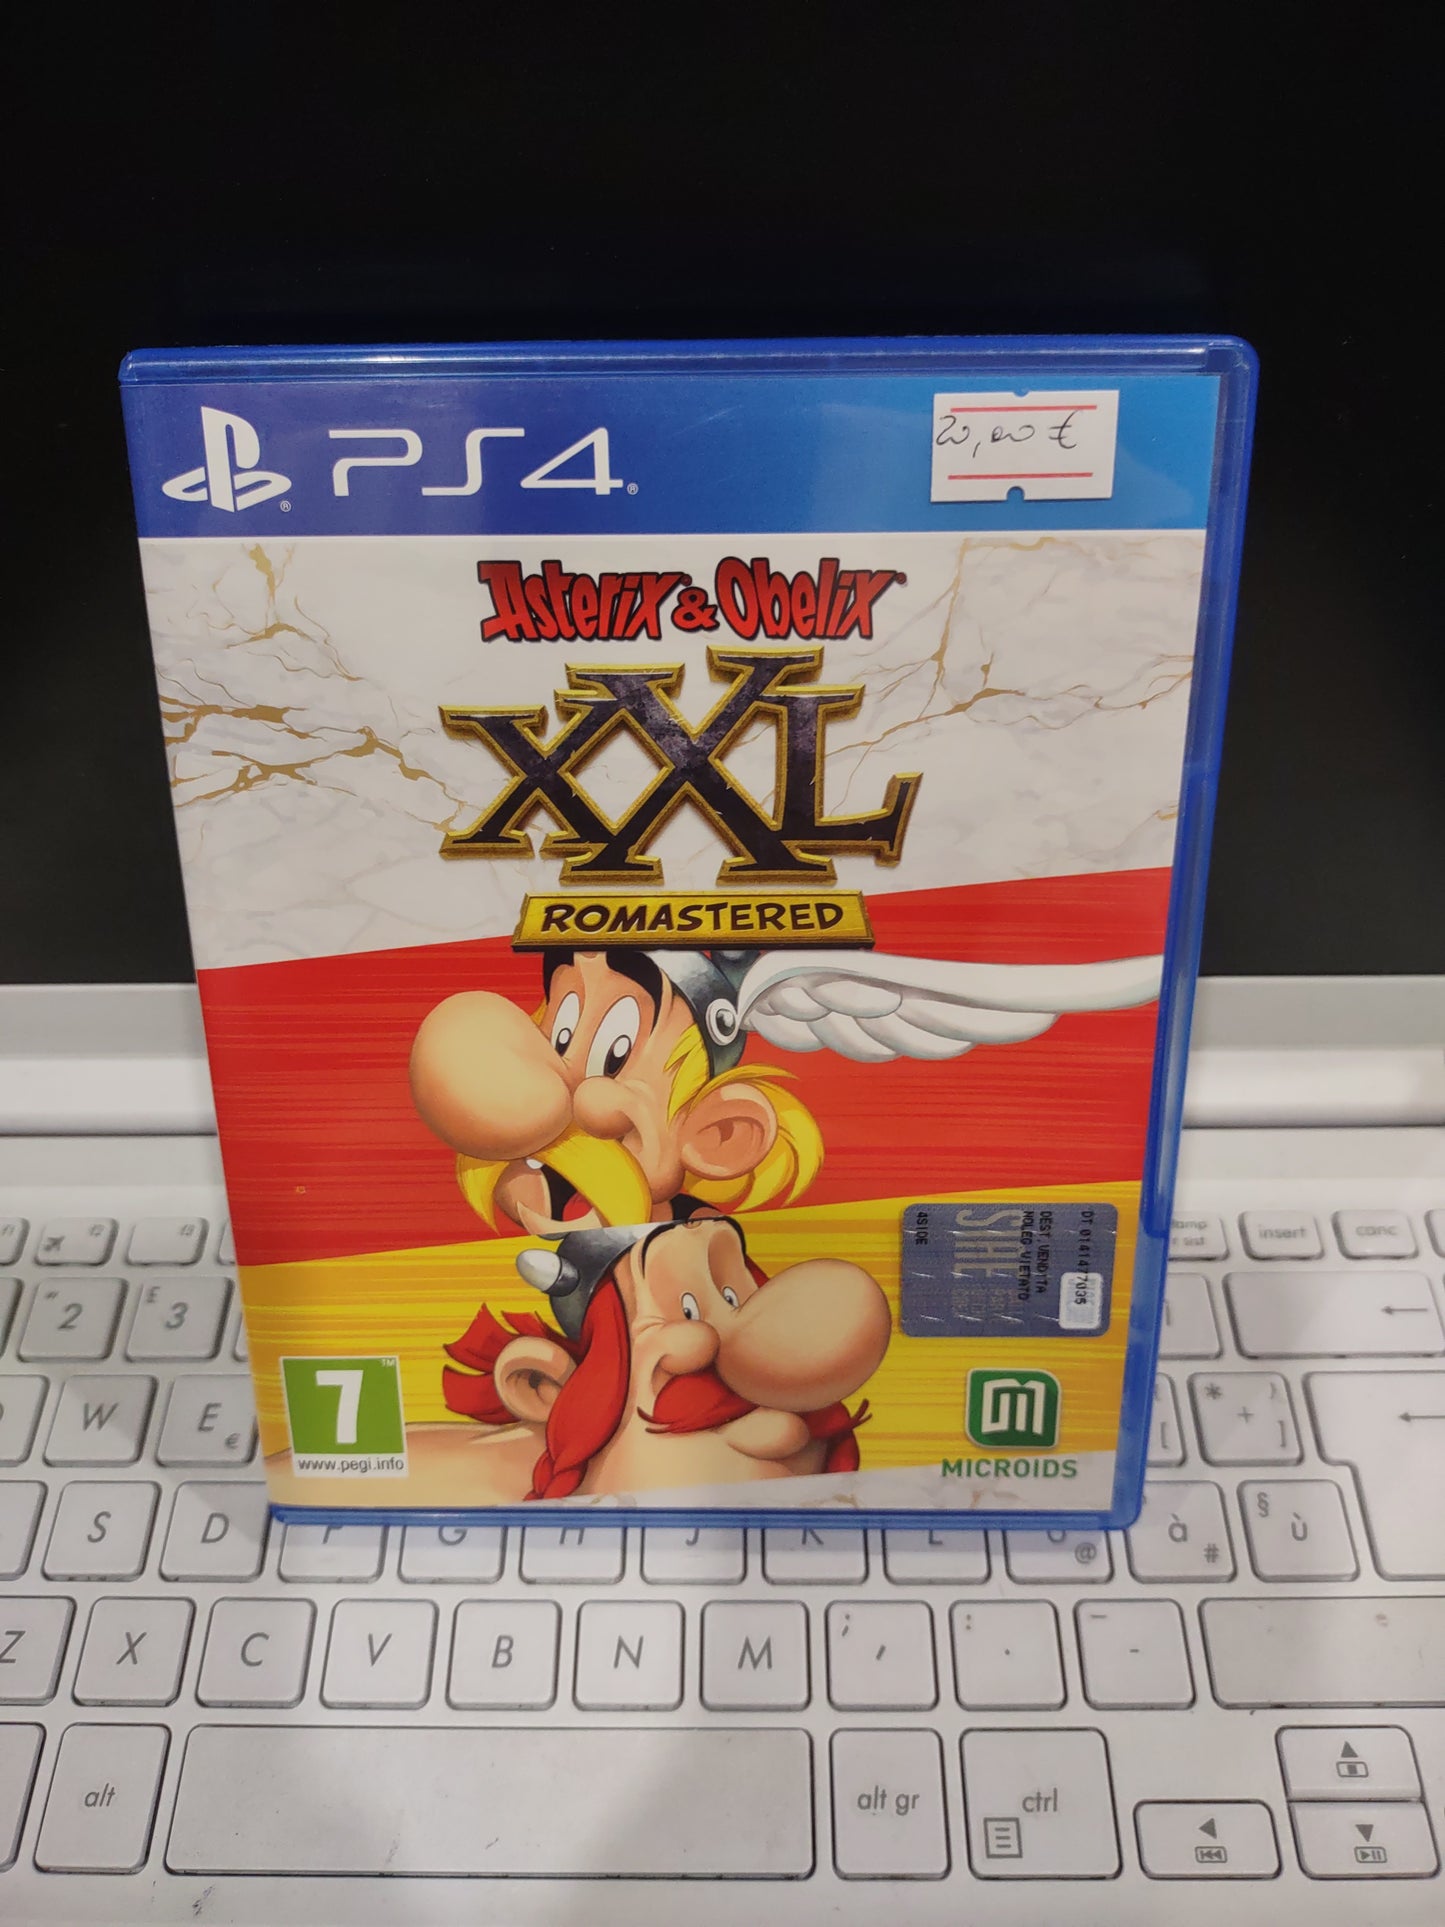 Gioco PS4 PlayStation Asterix e Obelix xxl romastered